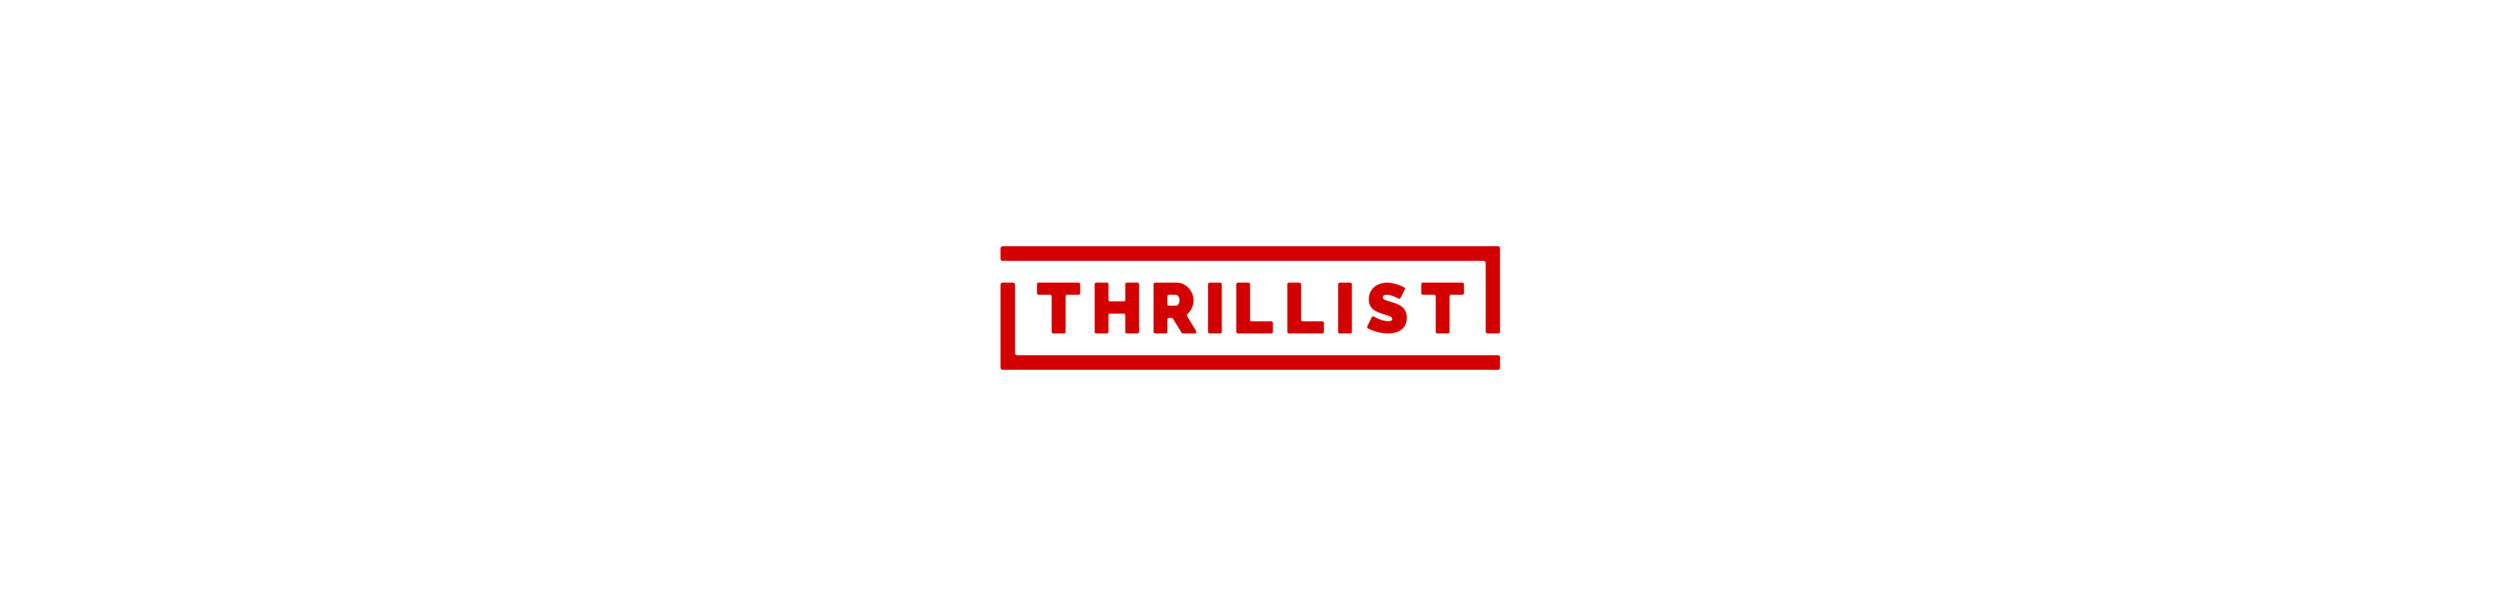 Thrillist_logo-resize.png